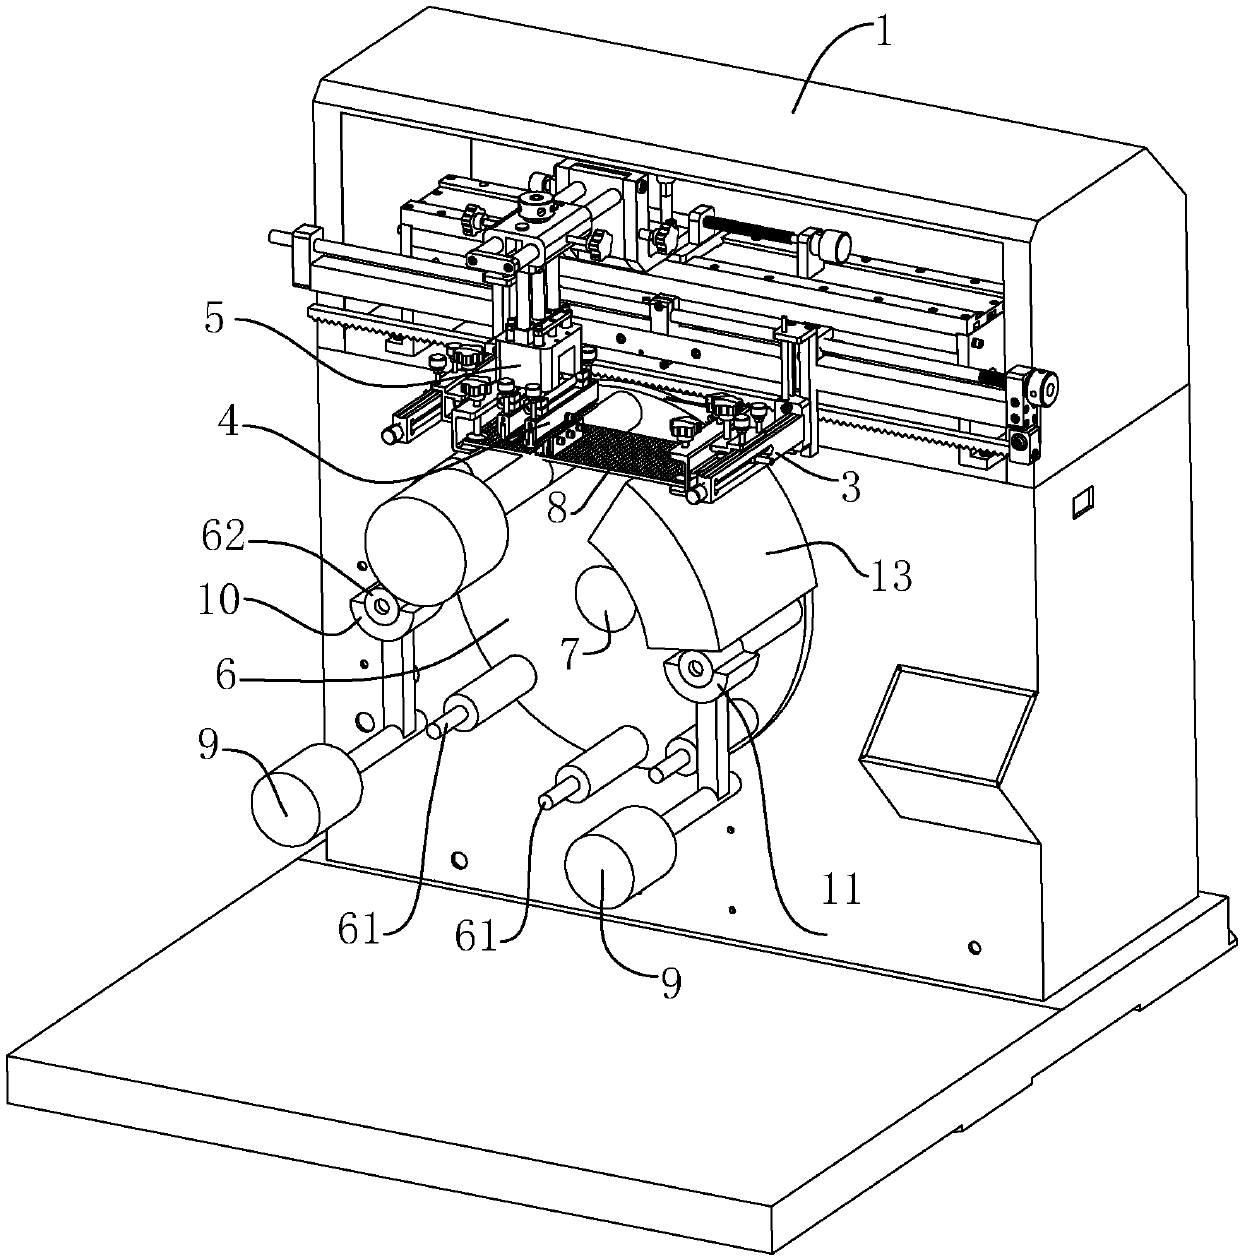 Screen printing machine achieving low-temperature curing